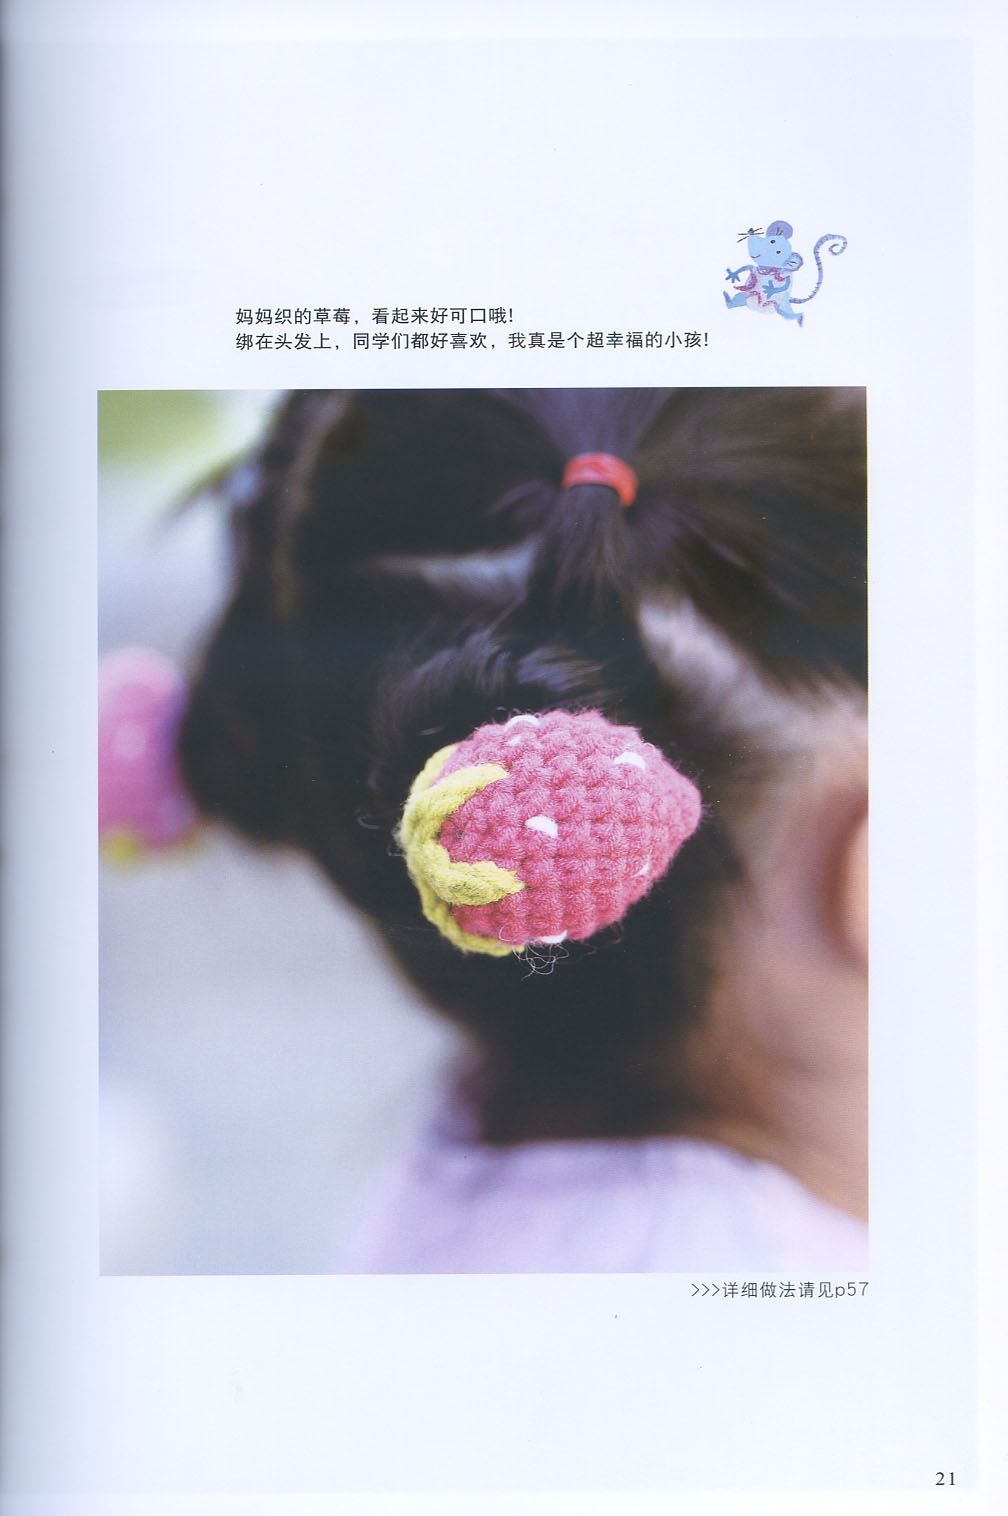 Strawberry hair clips amigurumi pattern (2)